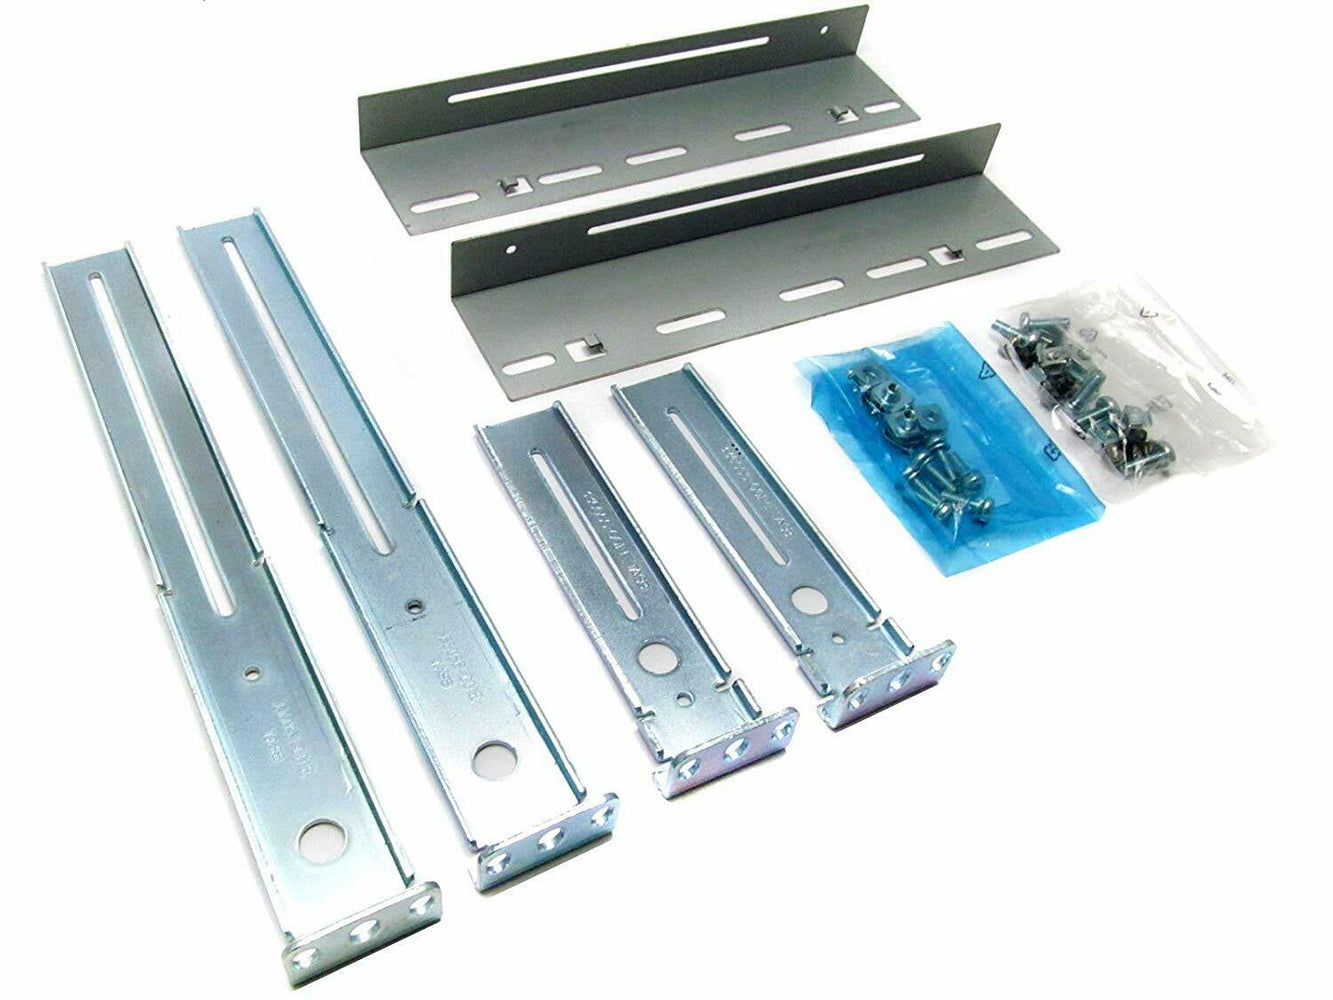 HP 337664-001 Mounting Hardware Rack Rail Kit For KVM Switch Box 336050-001